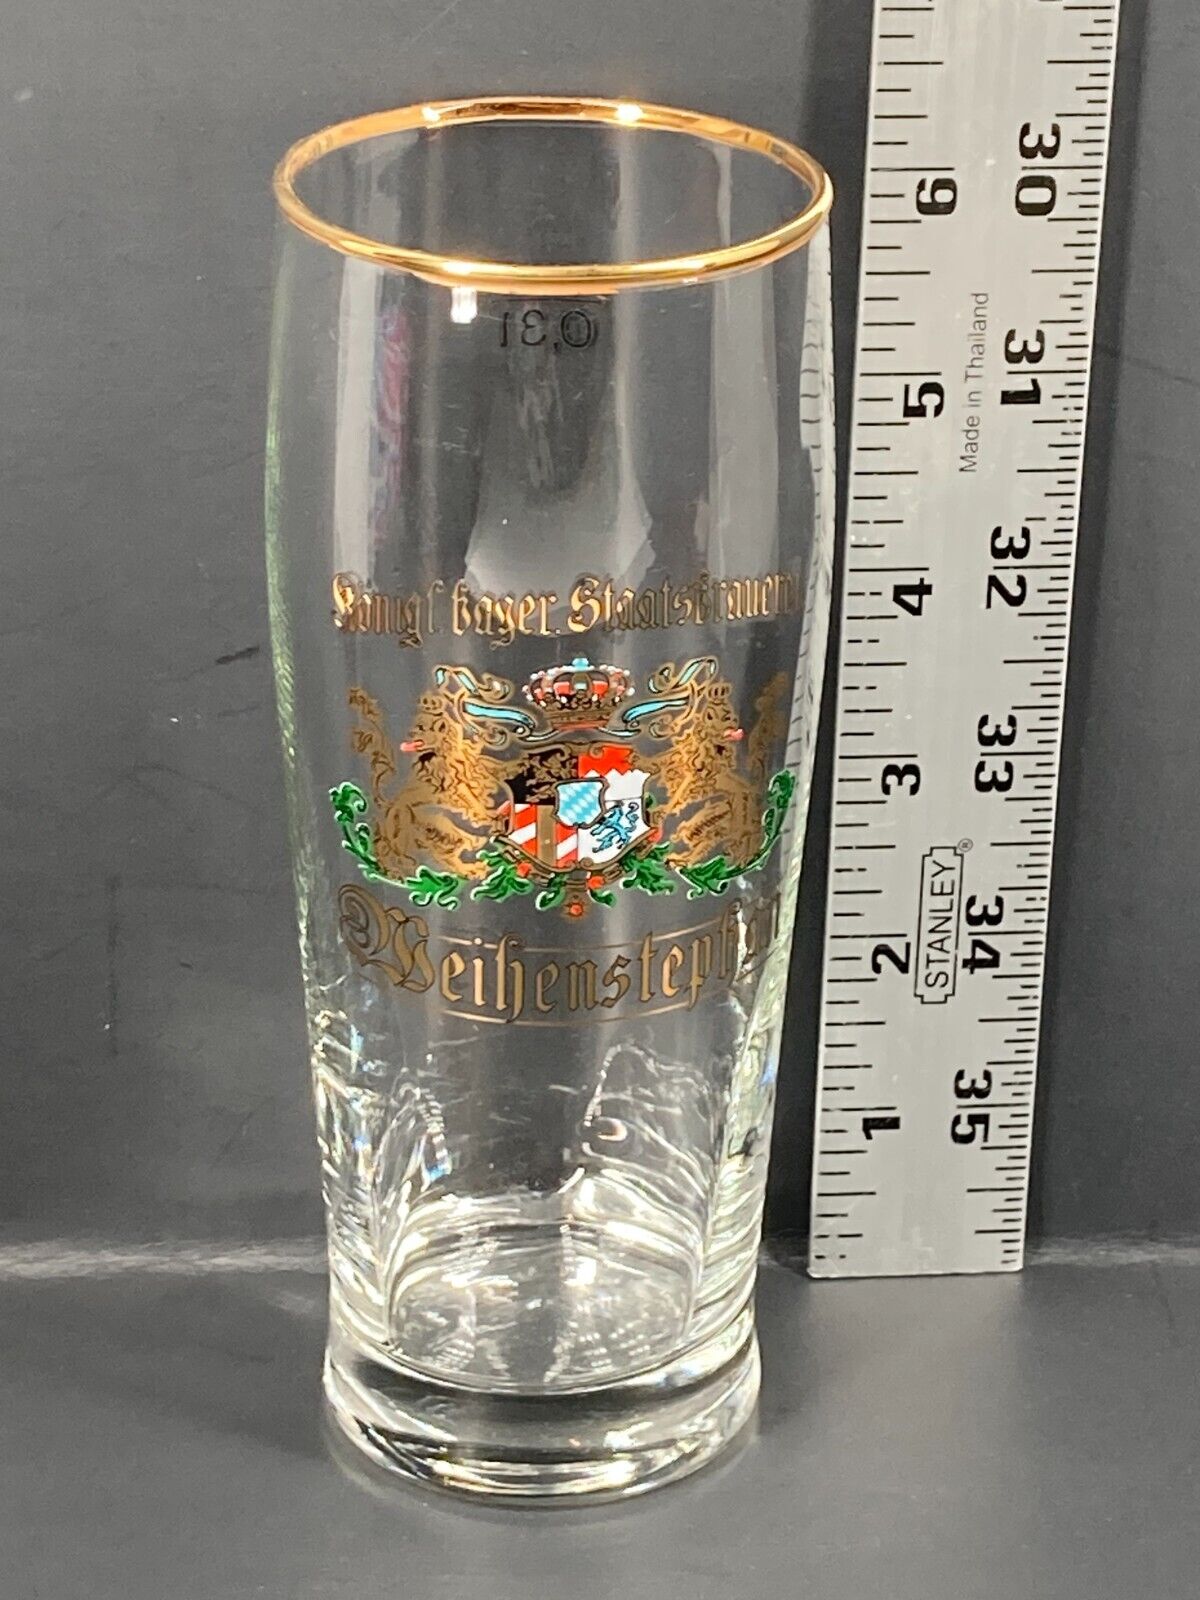 Ronigl Lager Staatsbrauerei Weihenstephan .3L German Beer Glass Optic Panels